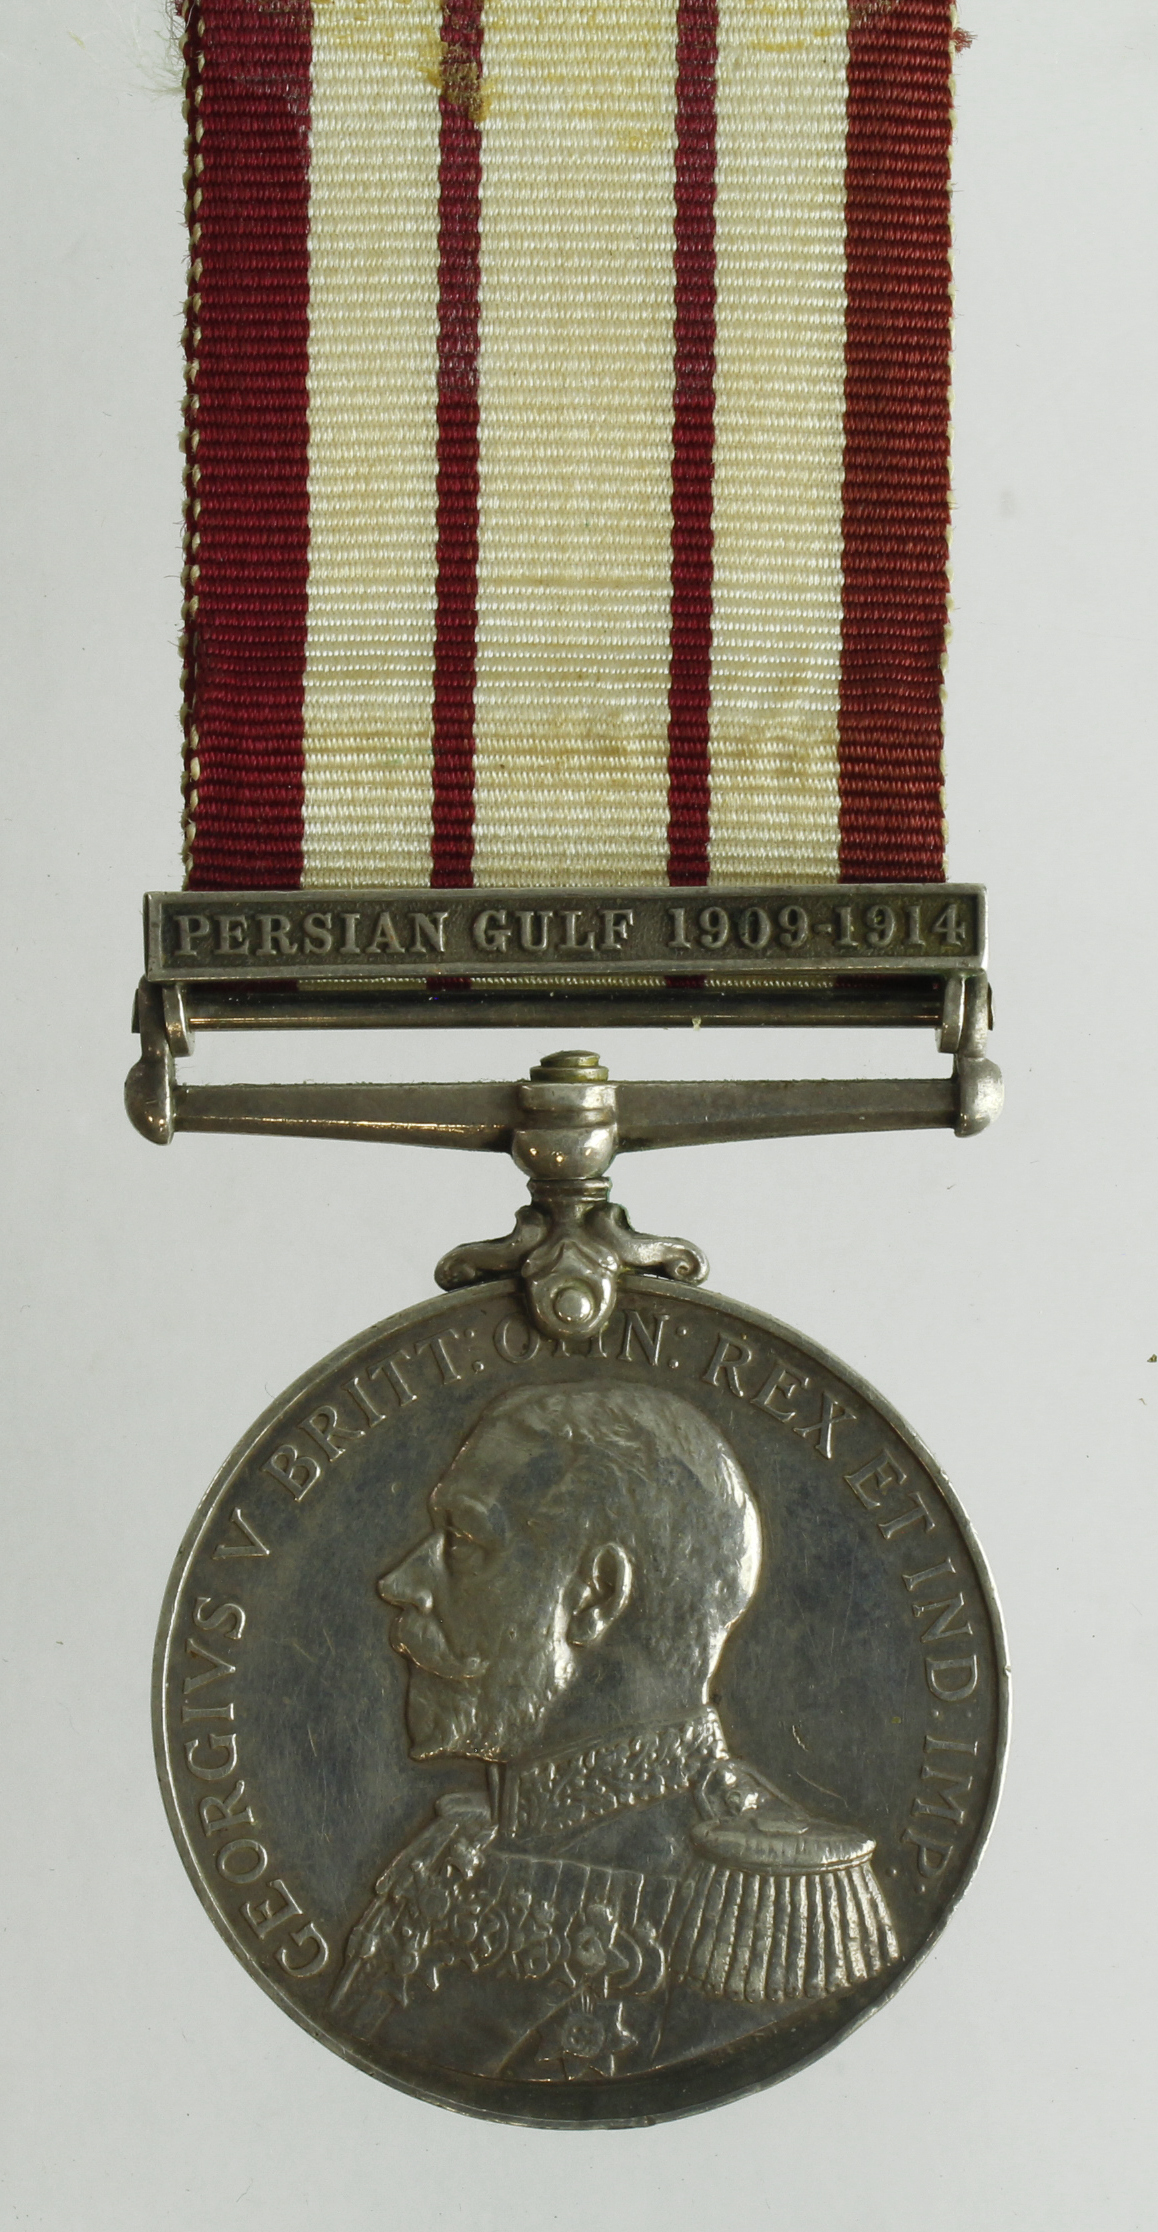 Naval General Service Medal GV with Persian Gulf 1909-1914 clasp (PO.14985 Lce Corpl E.Hudson RMLI